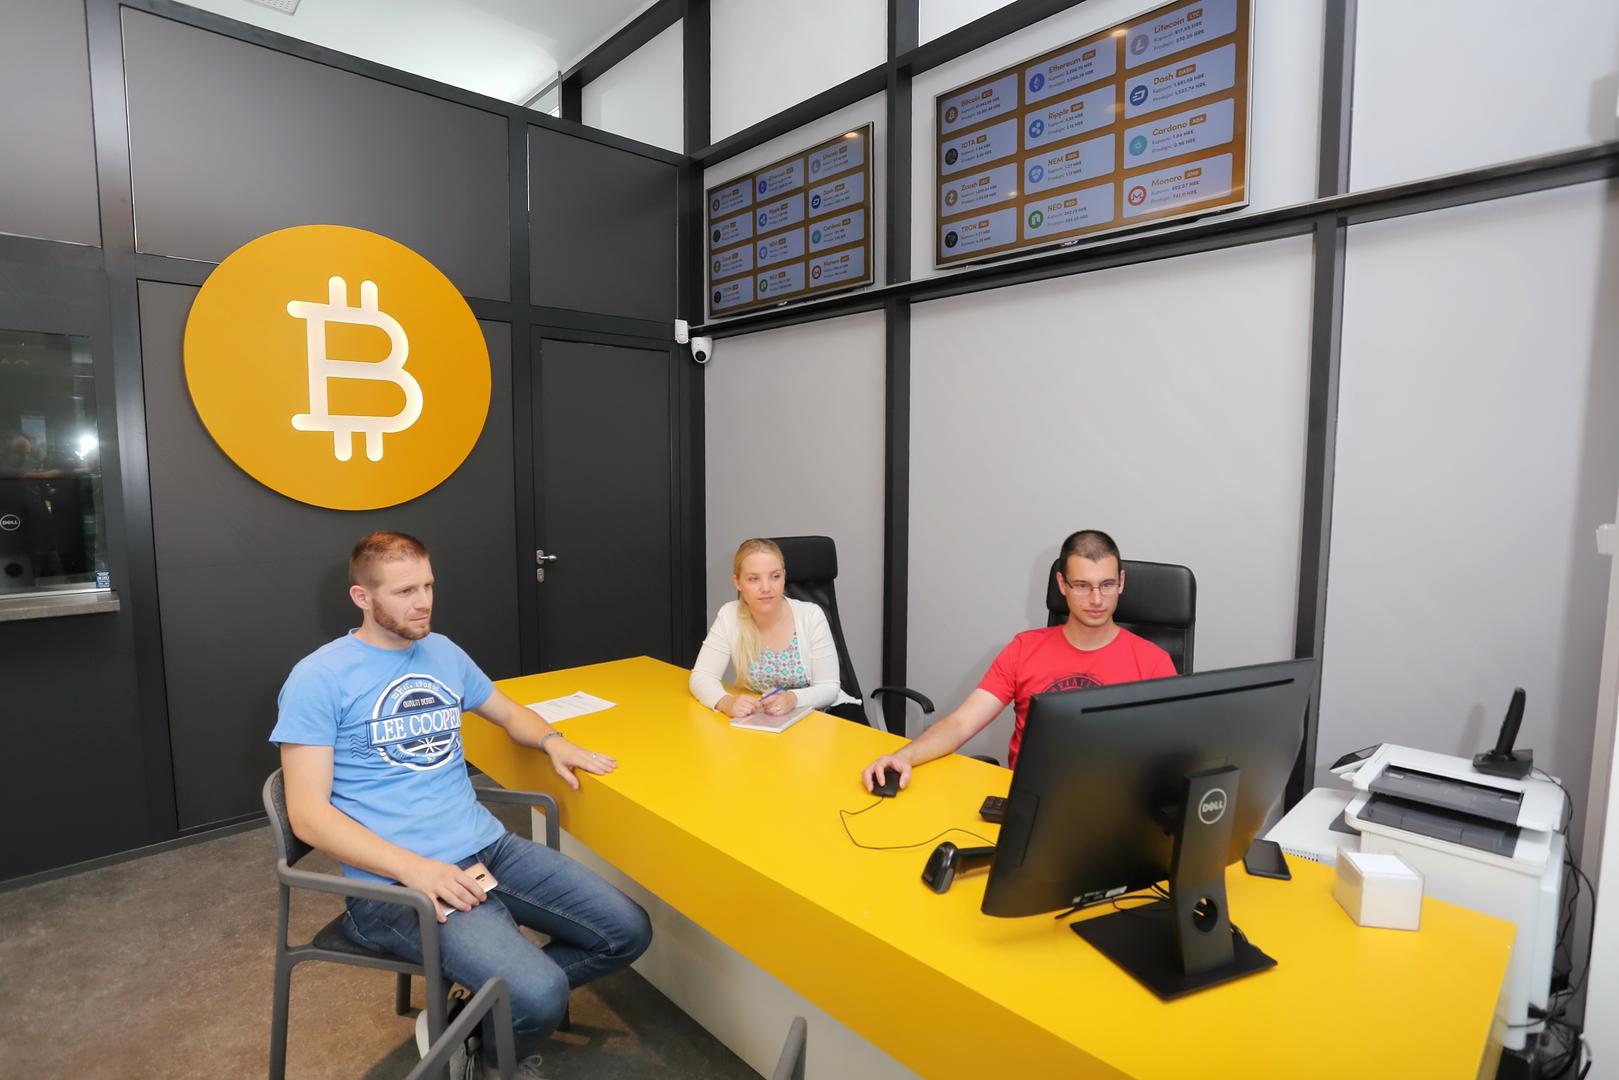 Nakon Splita i u Zagrebu je otvorena mjenjačnica kriptovaluta Bitcoin Store